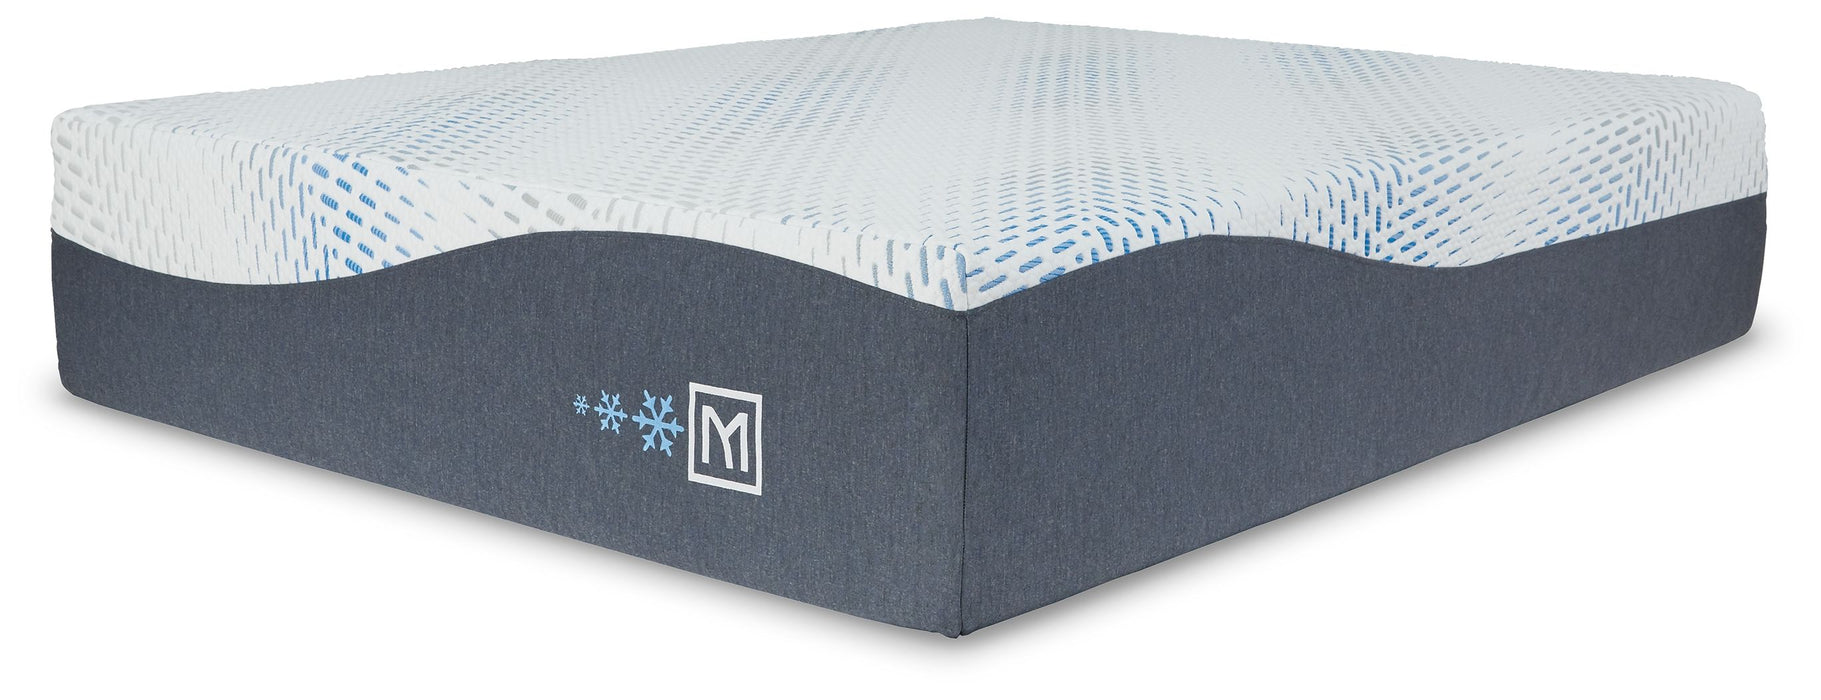 Millennium - Luxury Plush Gel Latex Hybrid Mattress